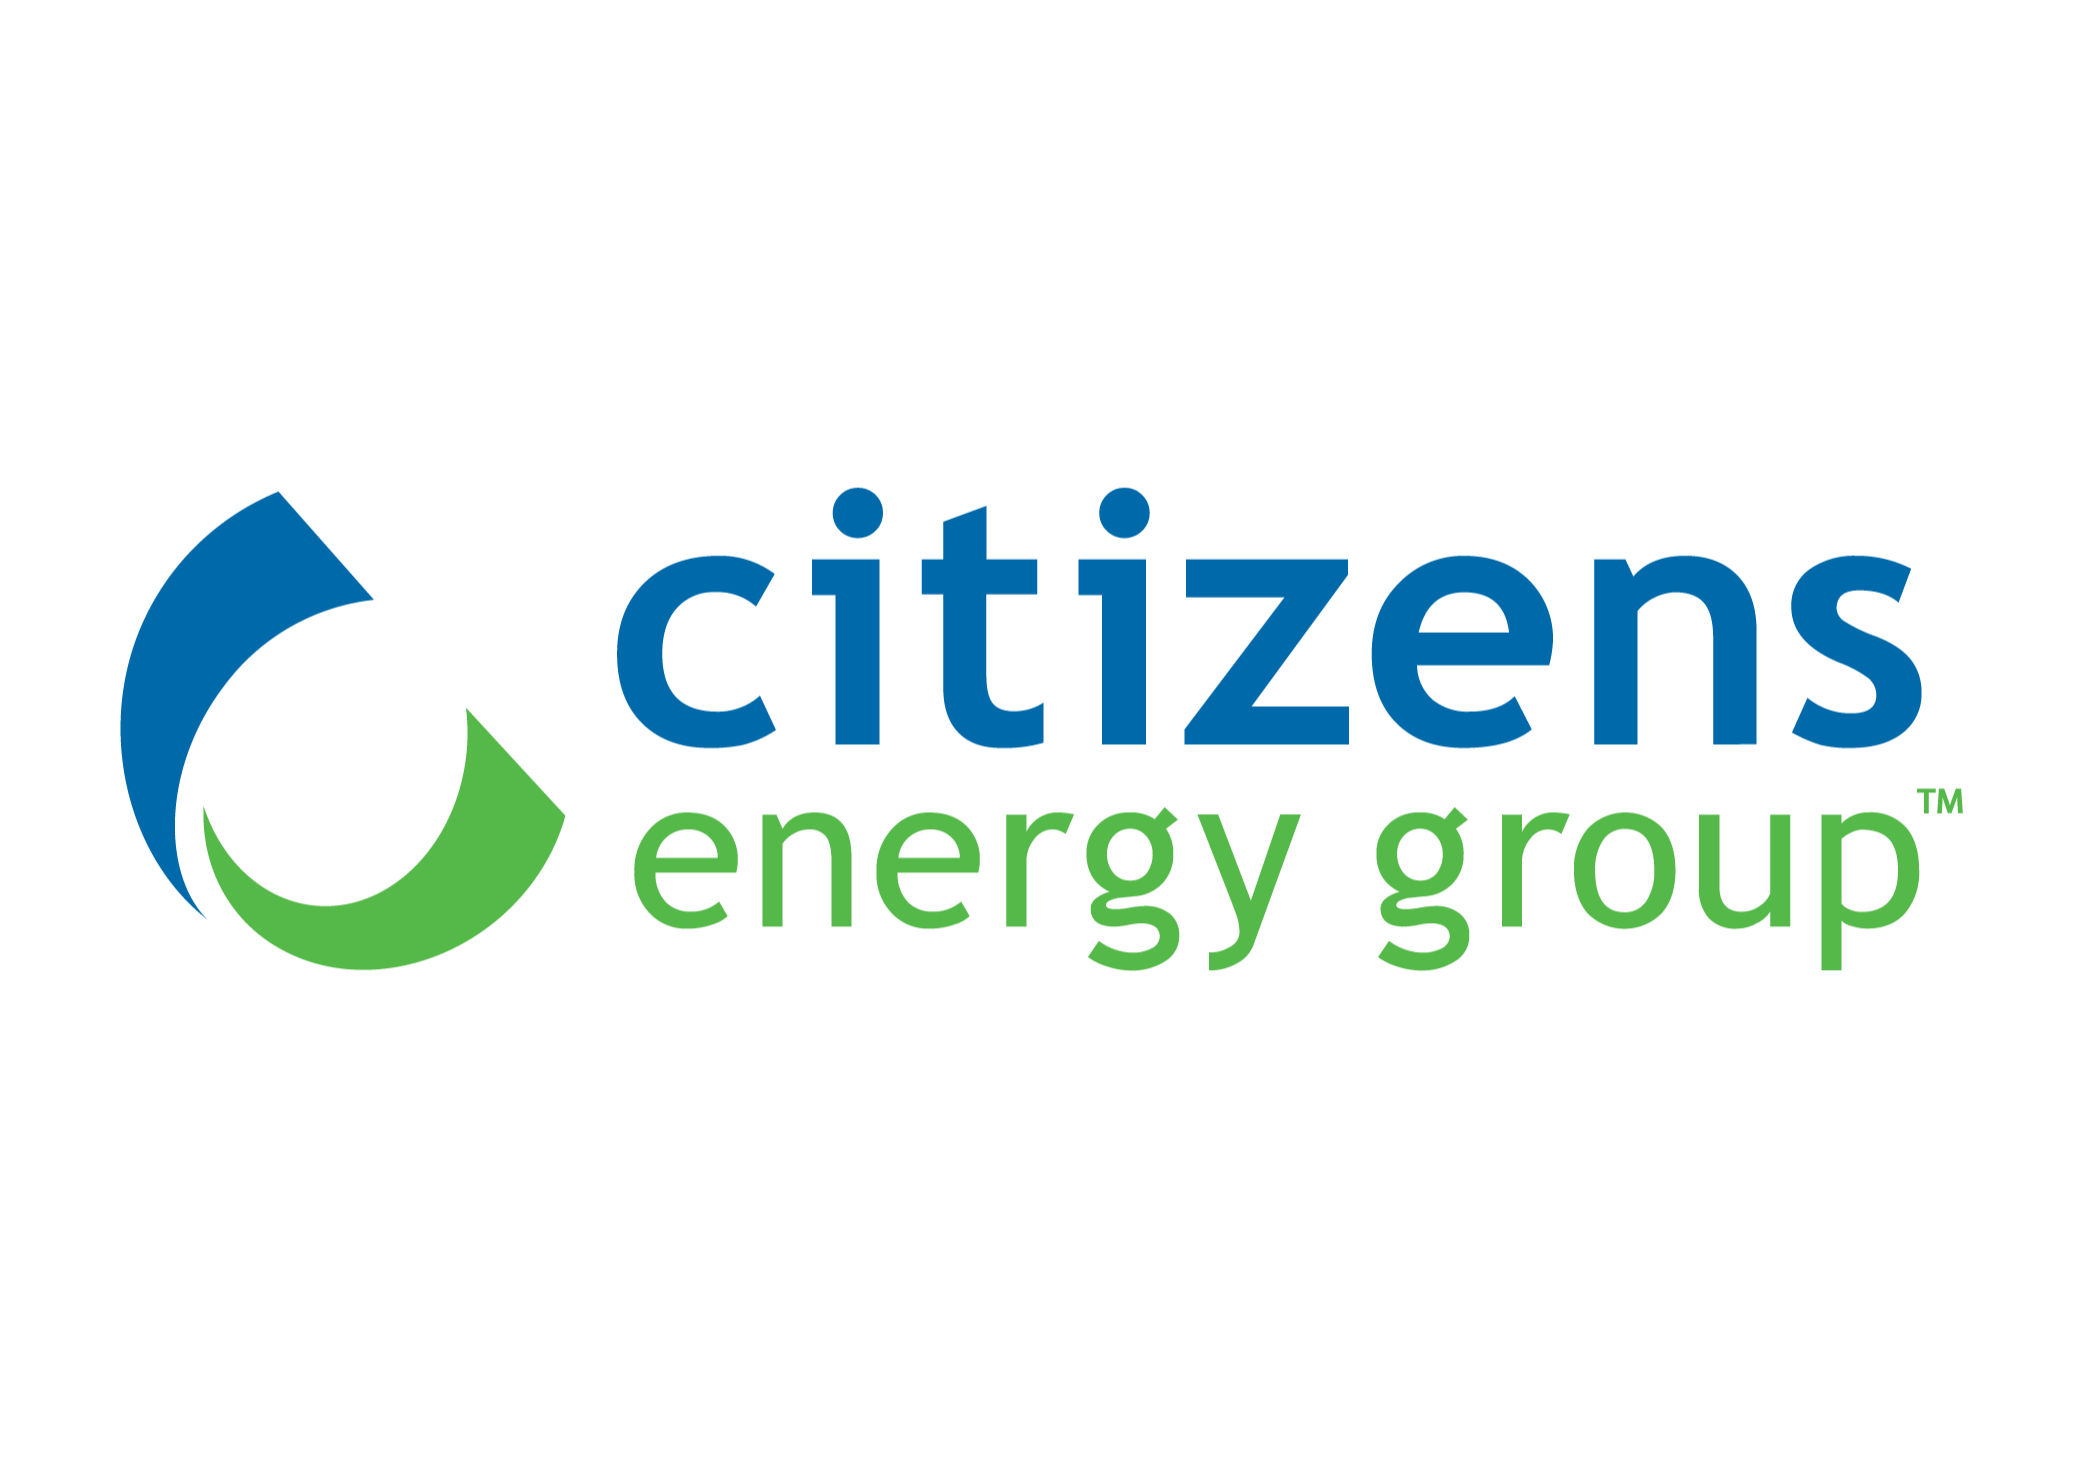 Citizens energy group logo